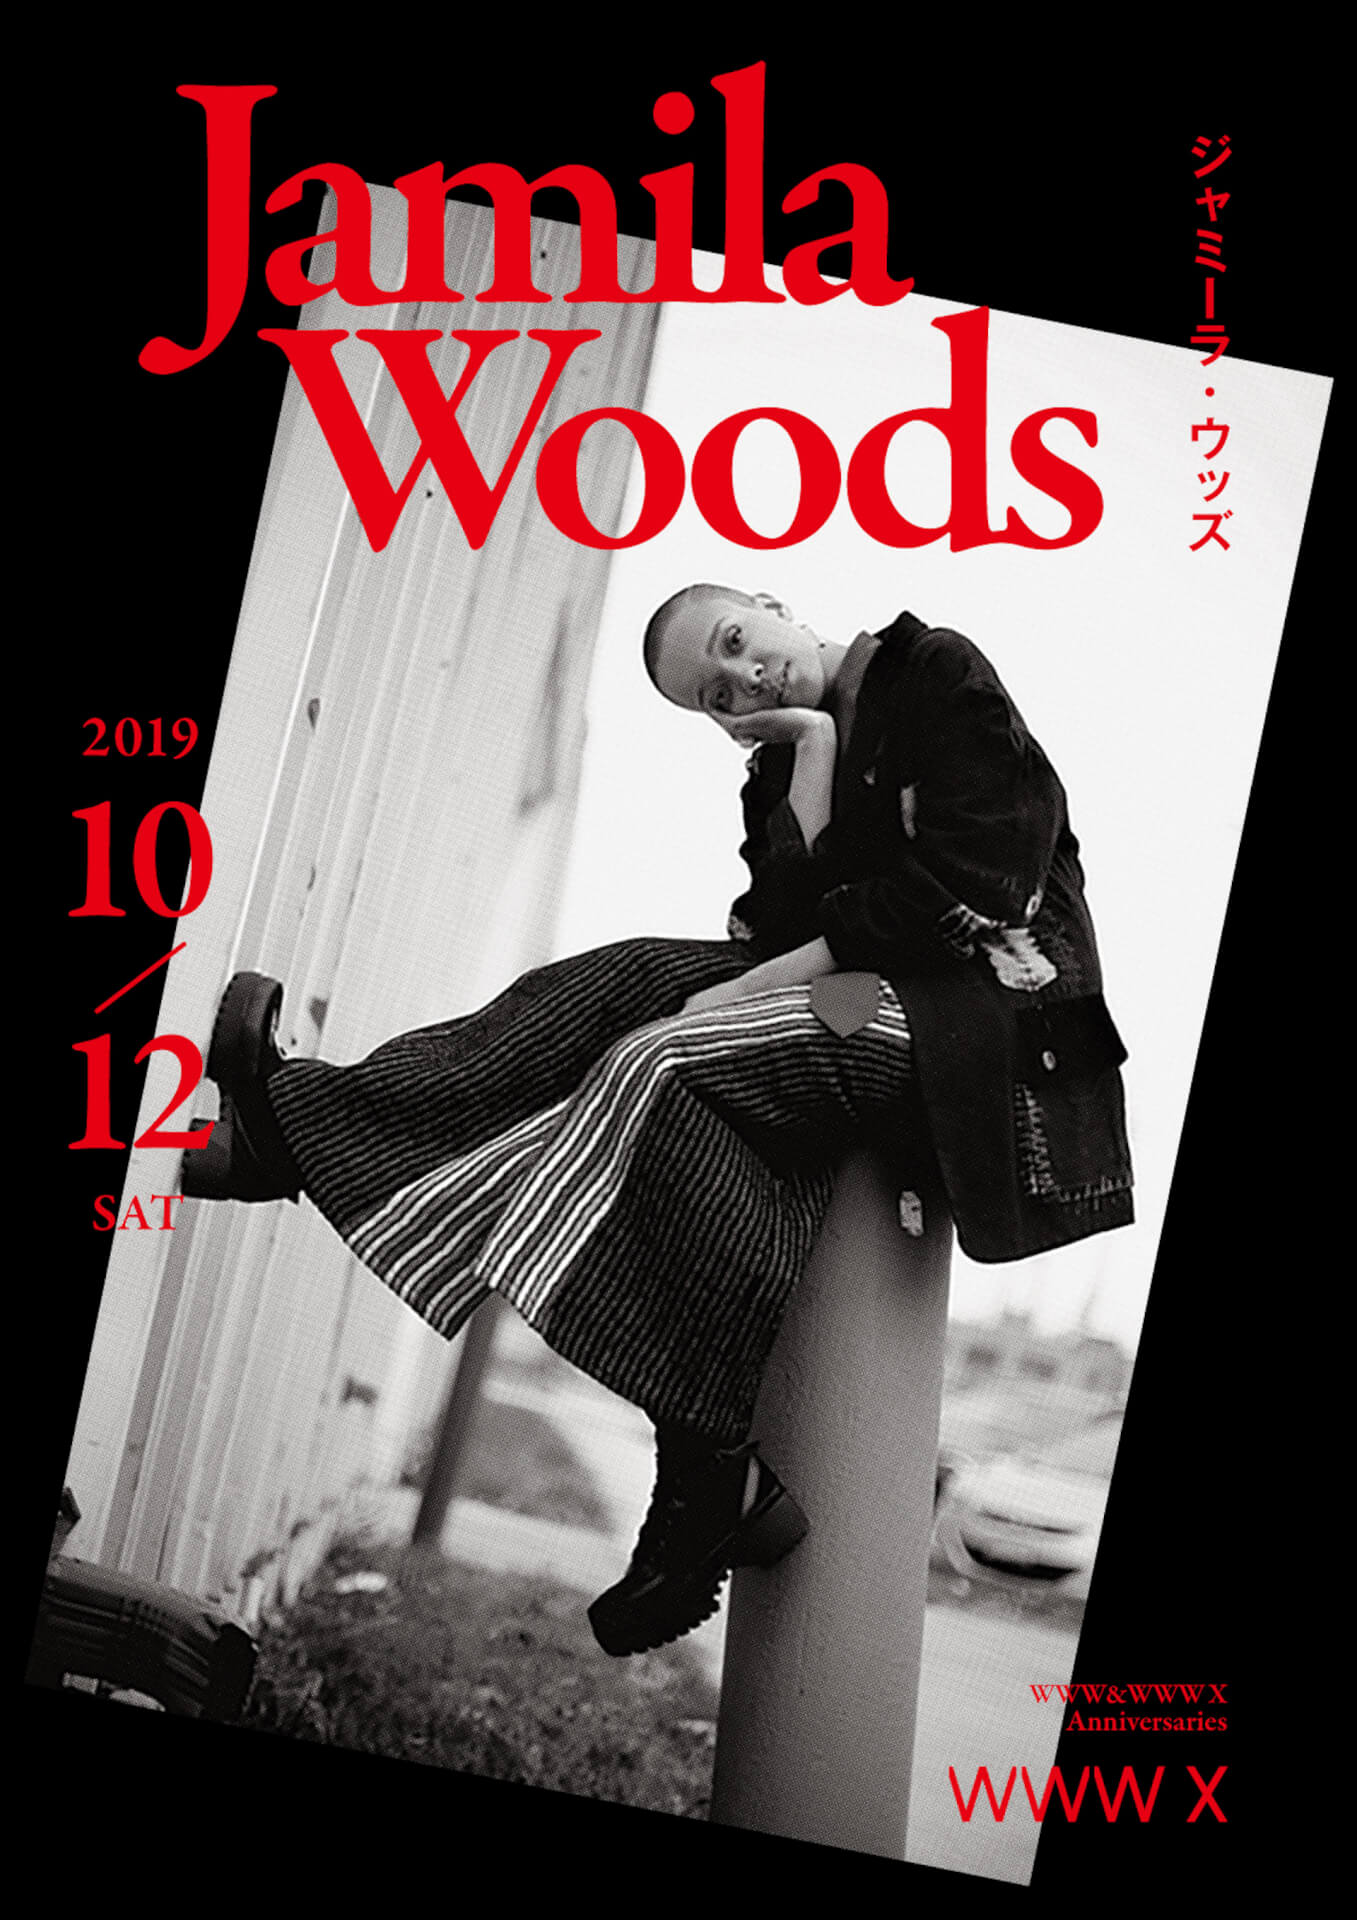 Jamila Woodsの東京公演（WWW X）に16FLIPがDJとして出演 music190731-www-anniversaries-6